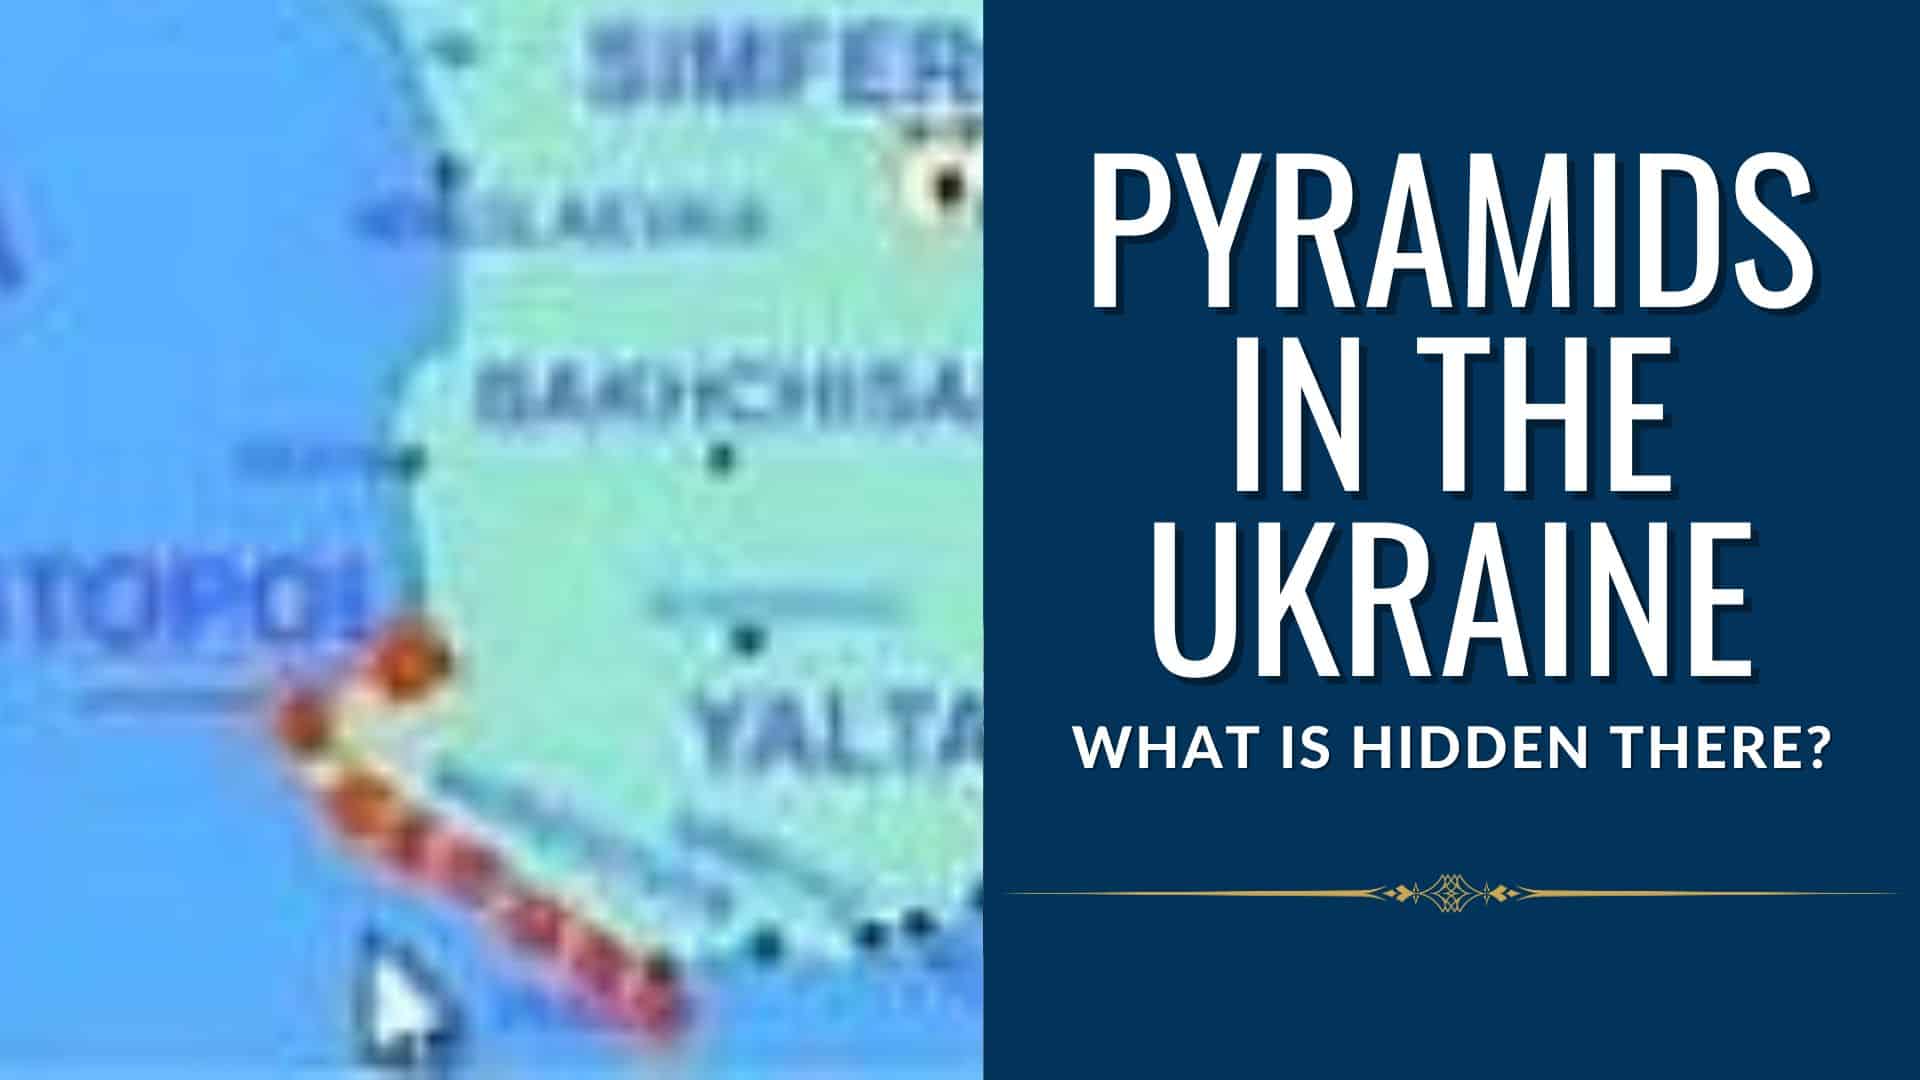 ukraine pyramids